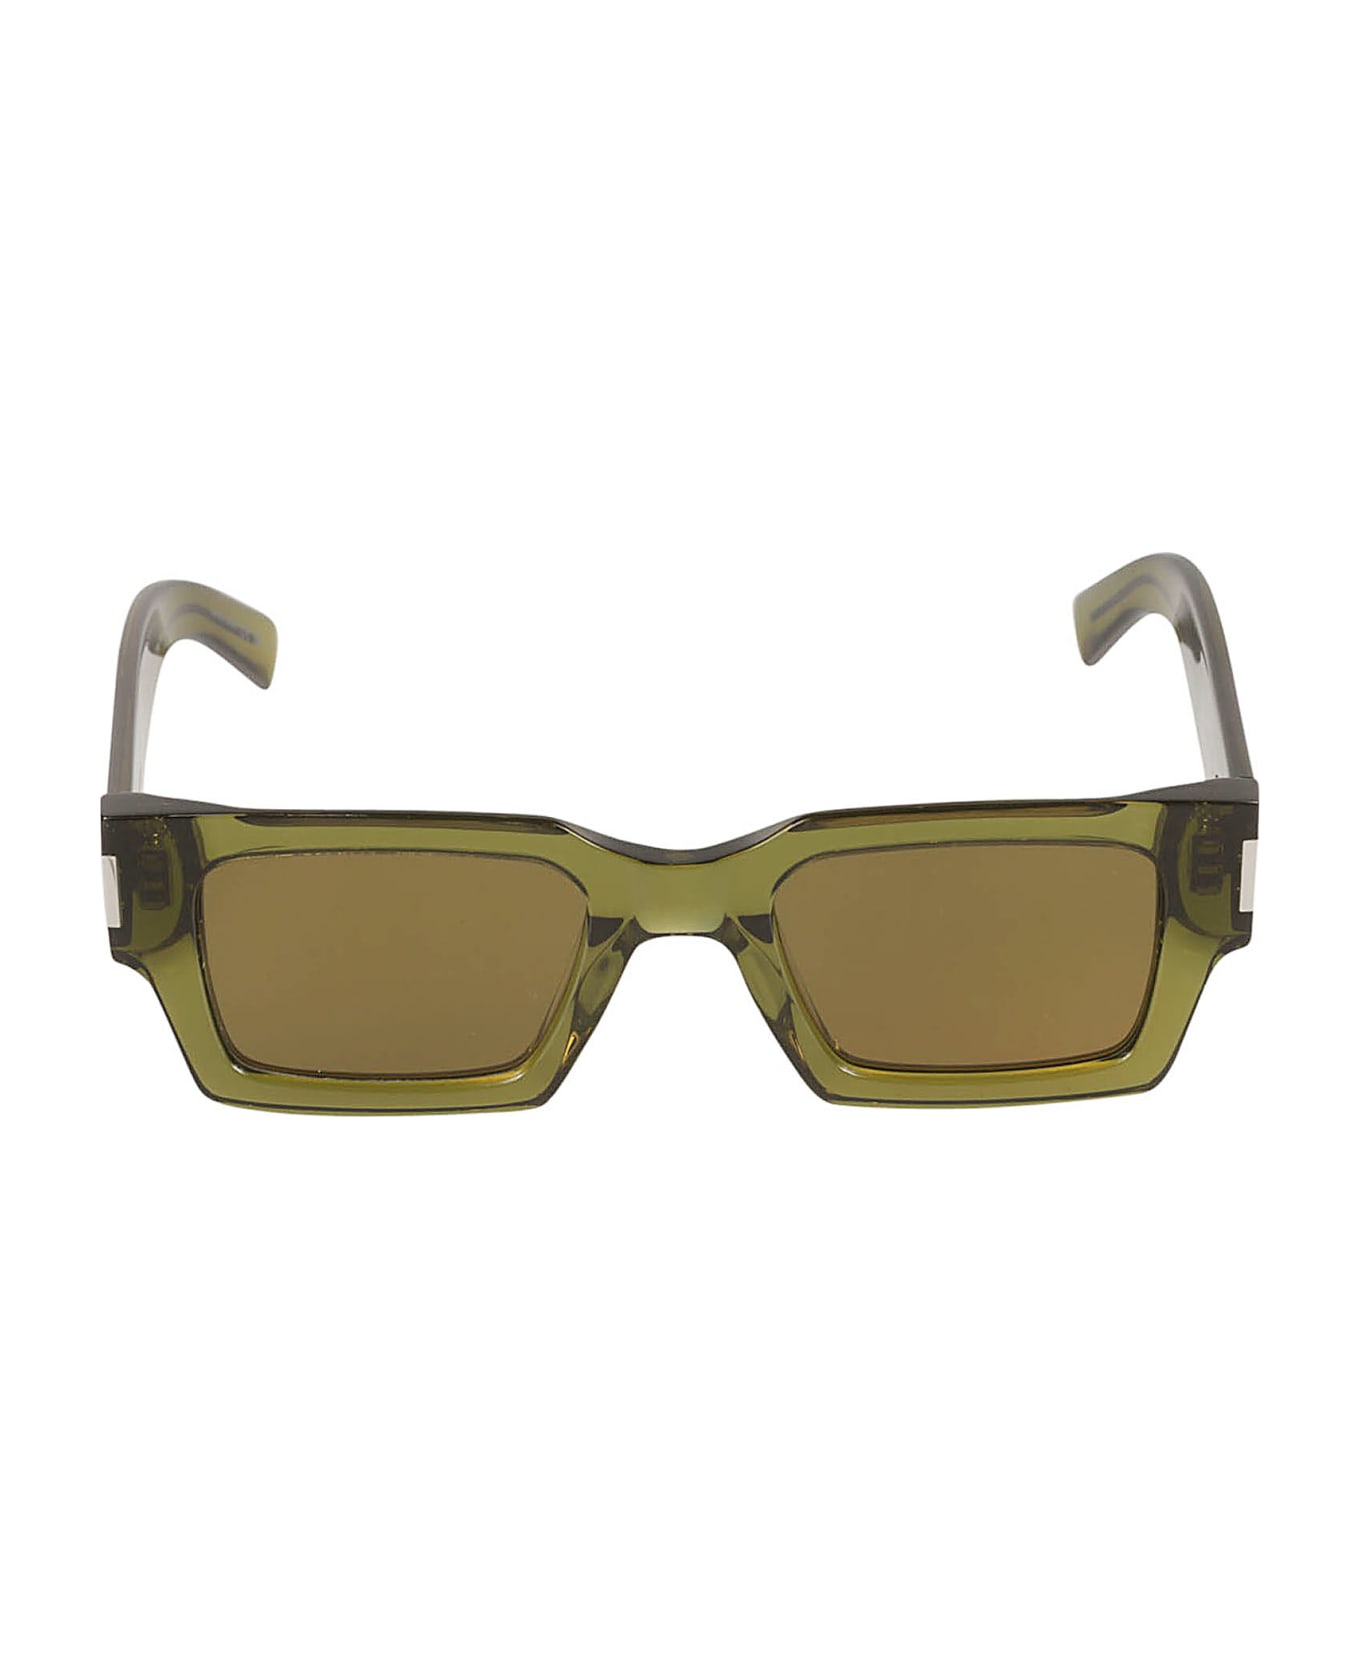 Saint Laurent Eyewear Rectangular Frame Flame Effect Sunglasses - Green/Brown